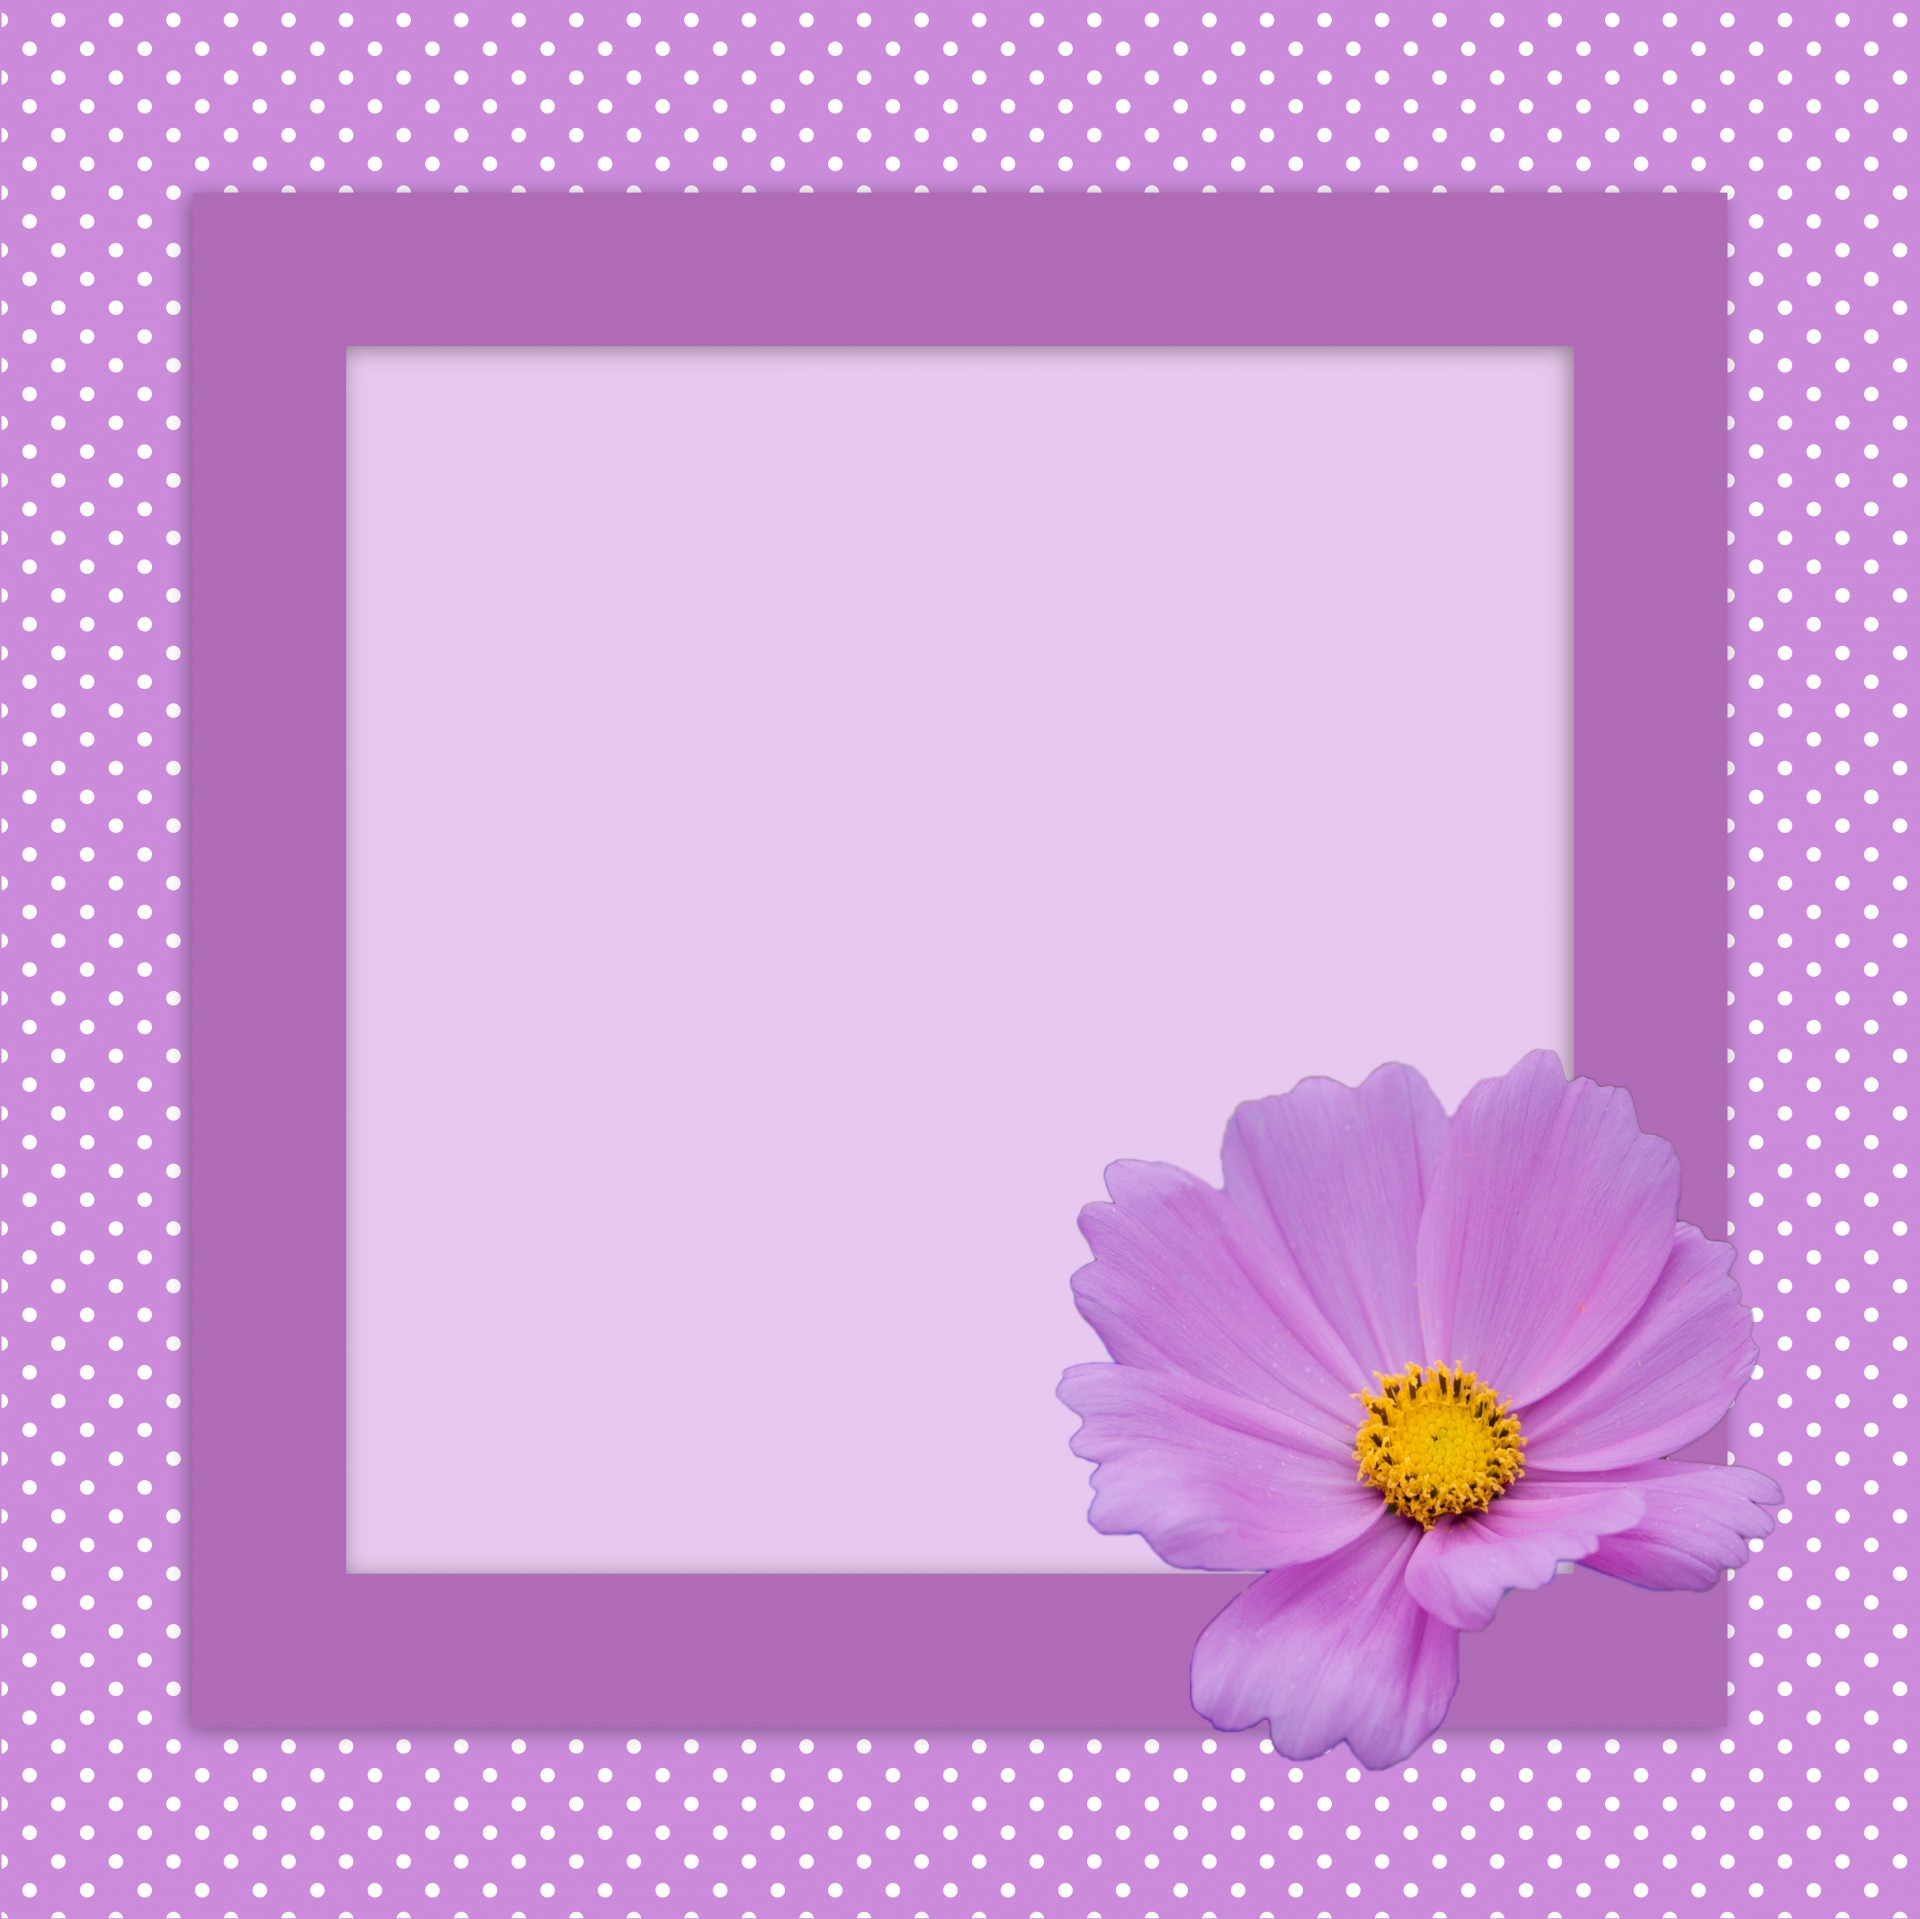 flower polka dots frame free photo